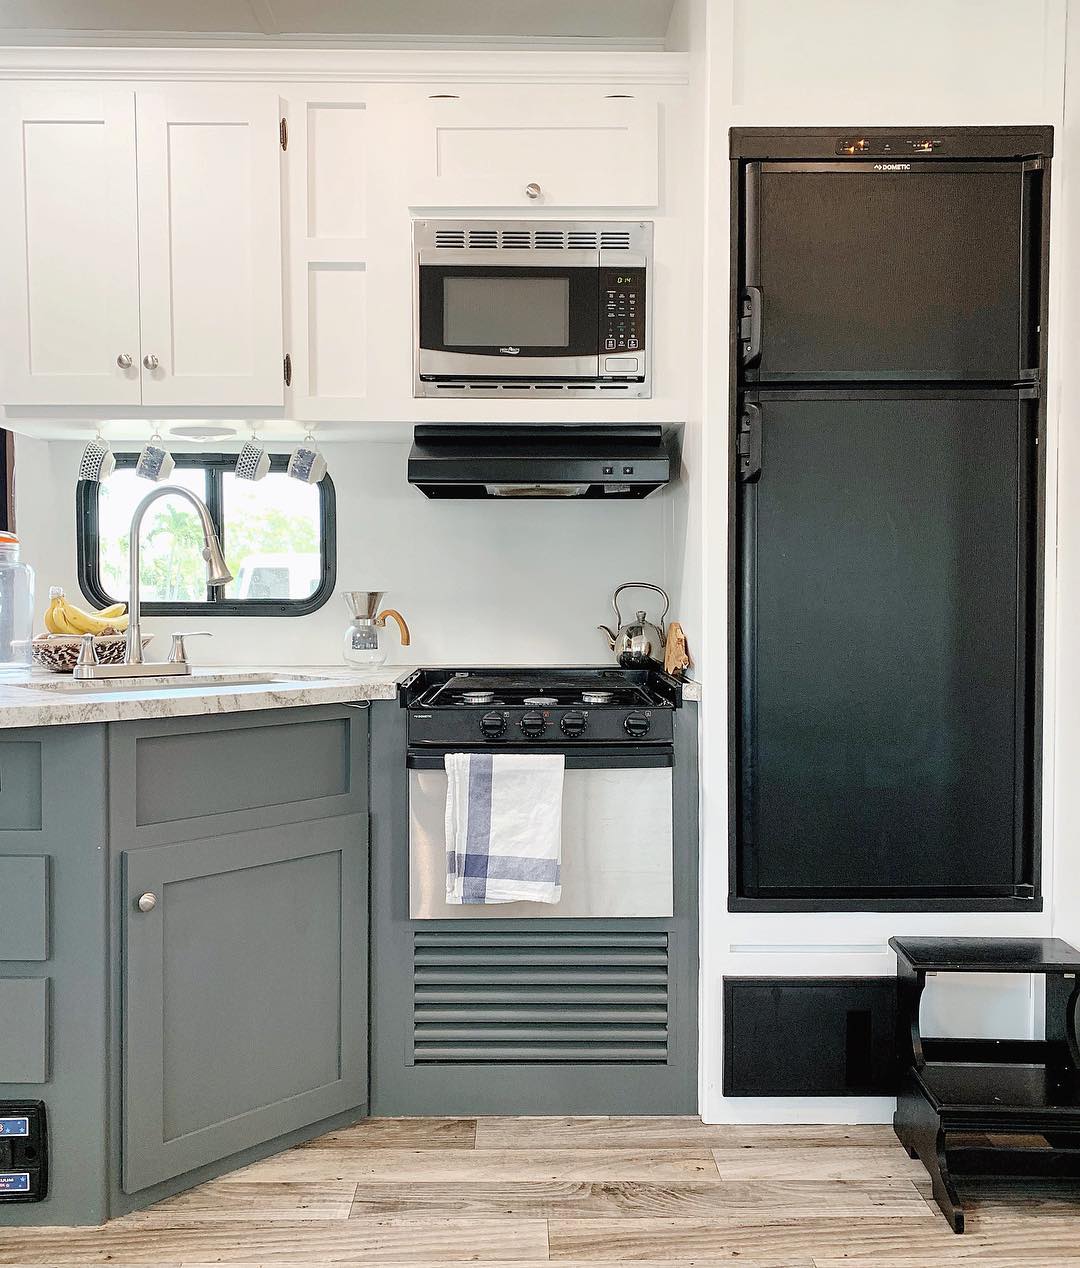 https://www.extraspace.com/blog/wp-content/uploads/2020/05/rv-renovation-ideas-install-new-kitchen-appliances.jpg